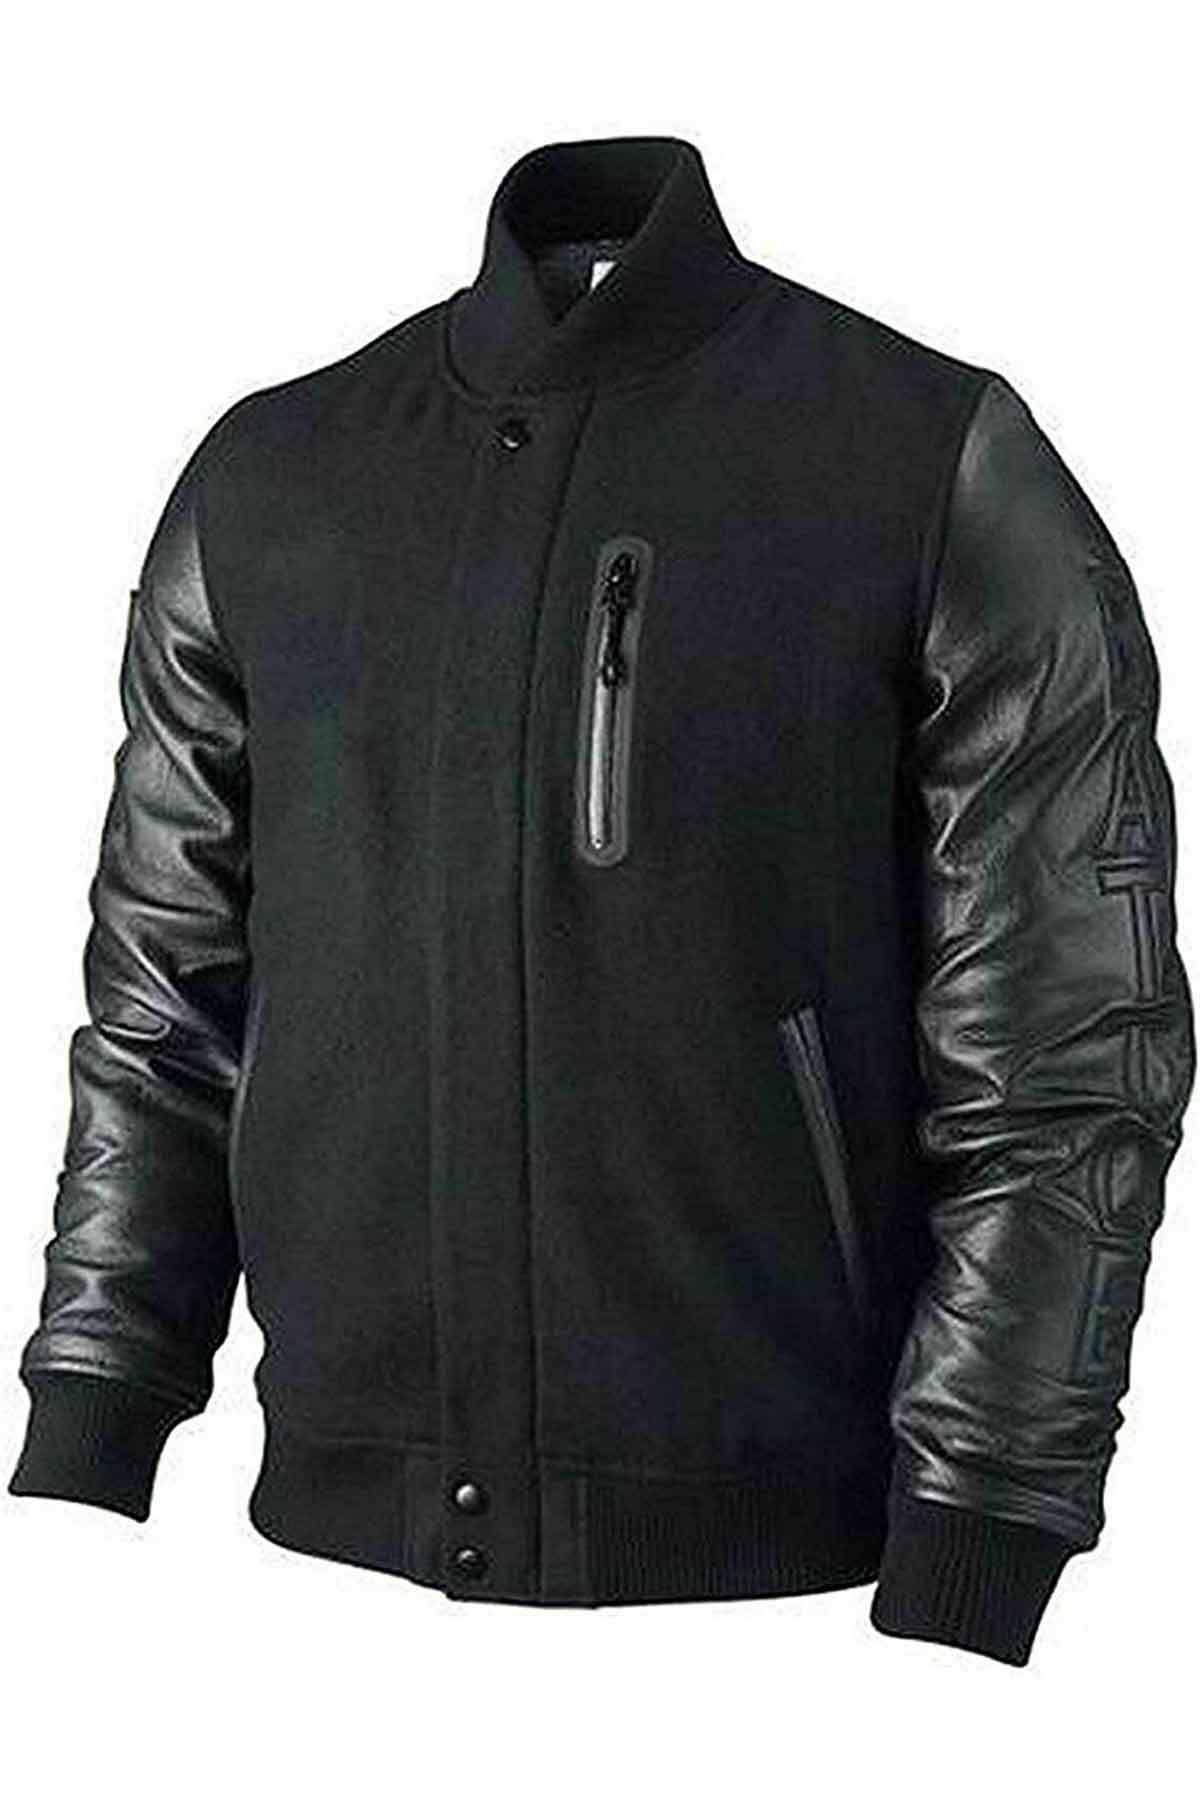 Michael B. Jordan Creed Bomber Jacket With Cowhide Leather Sleeves